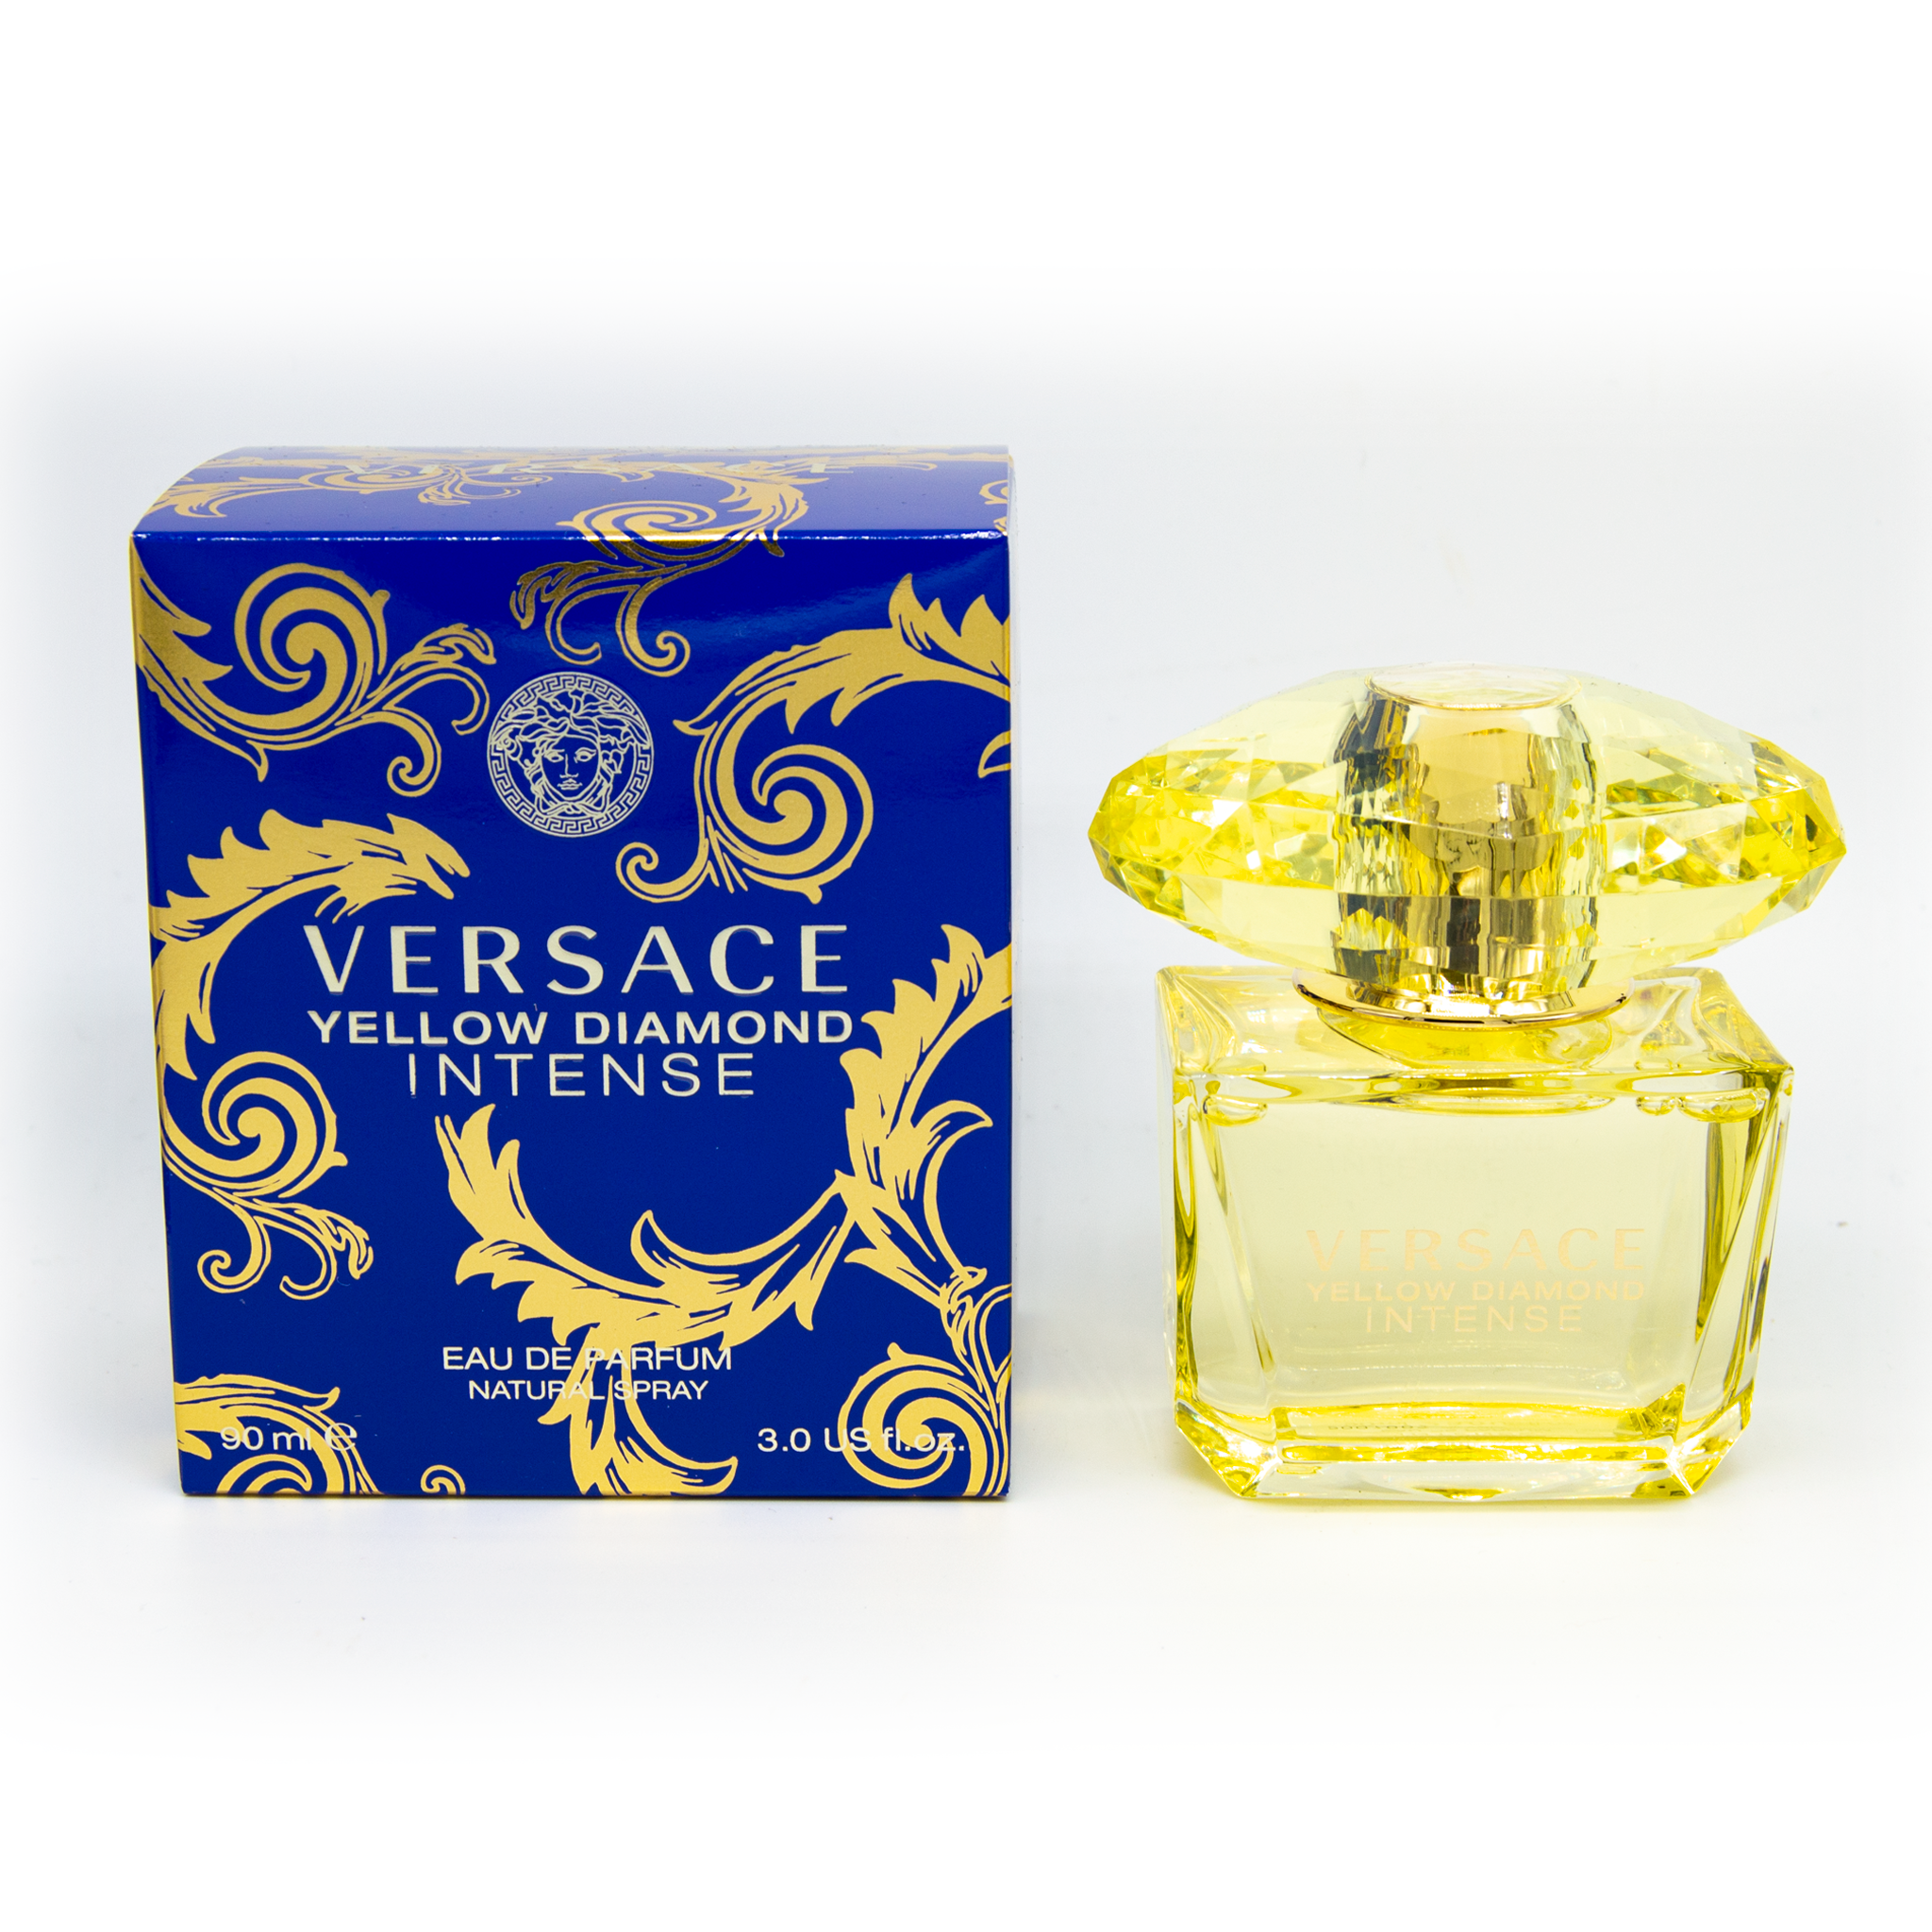 Versace Online Diamond Essence Yellow Fragrances – Intense